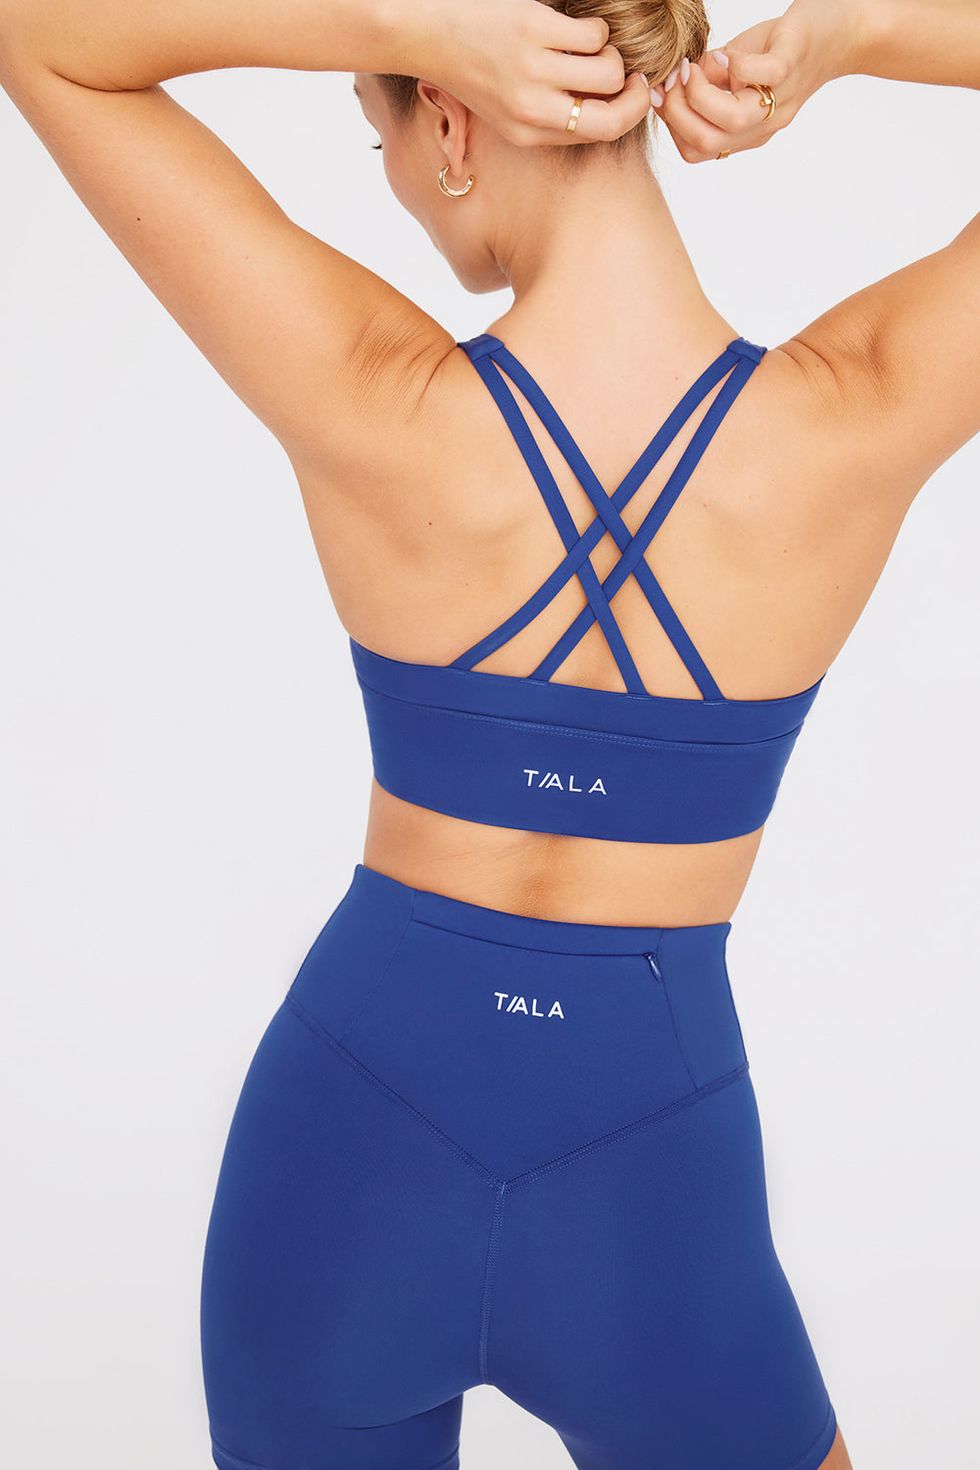 Tala - TALA SKINLUXE LEGGINGS on Designer Wardrobe